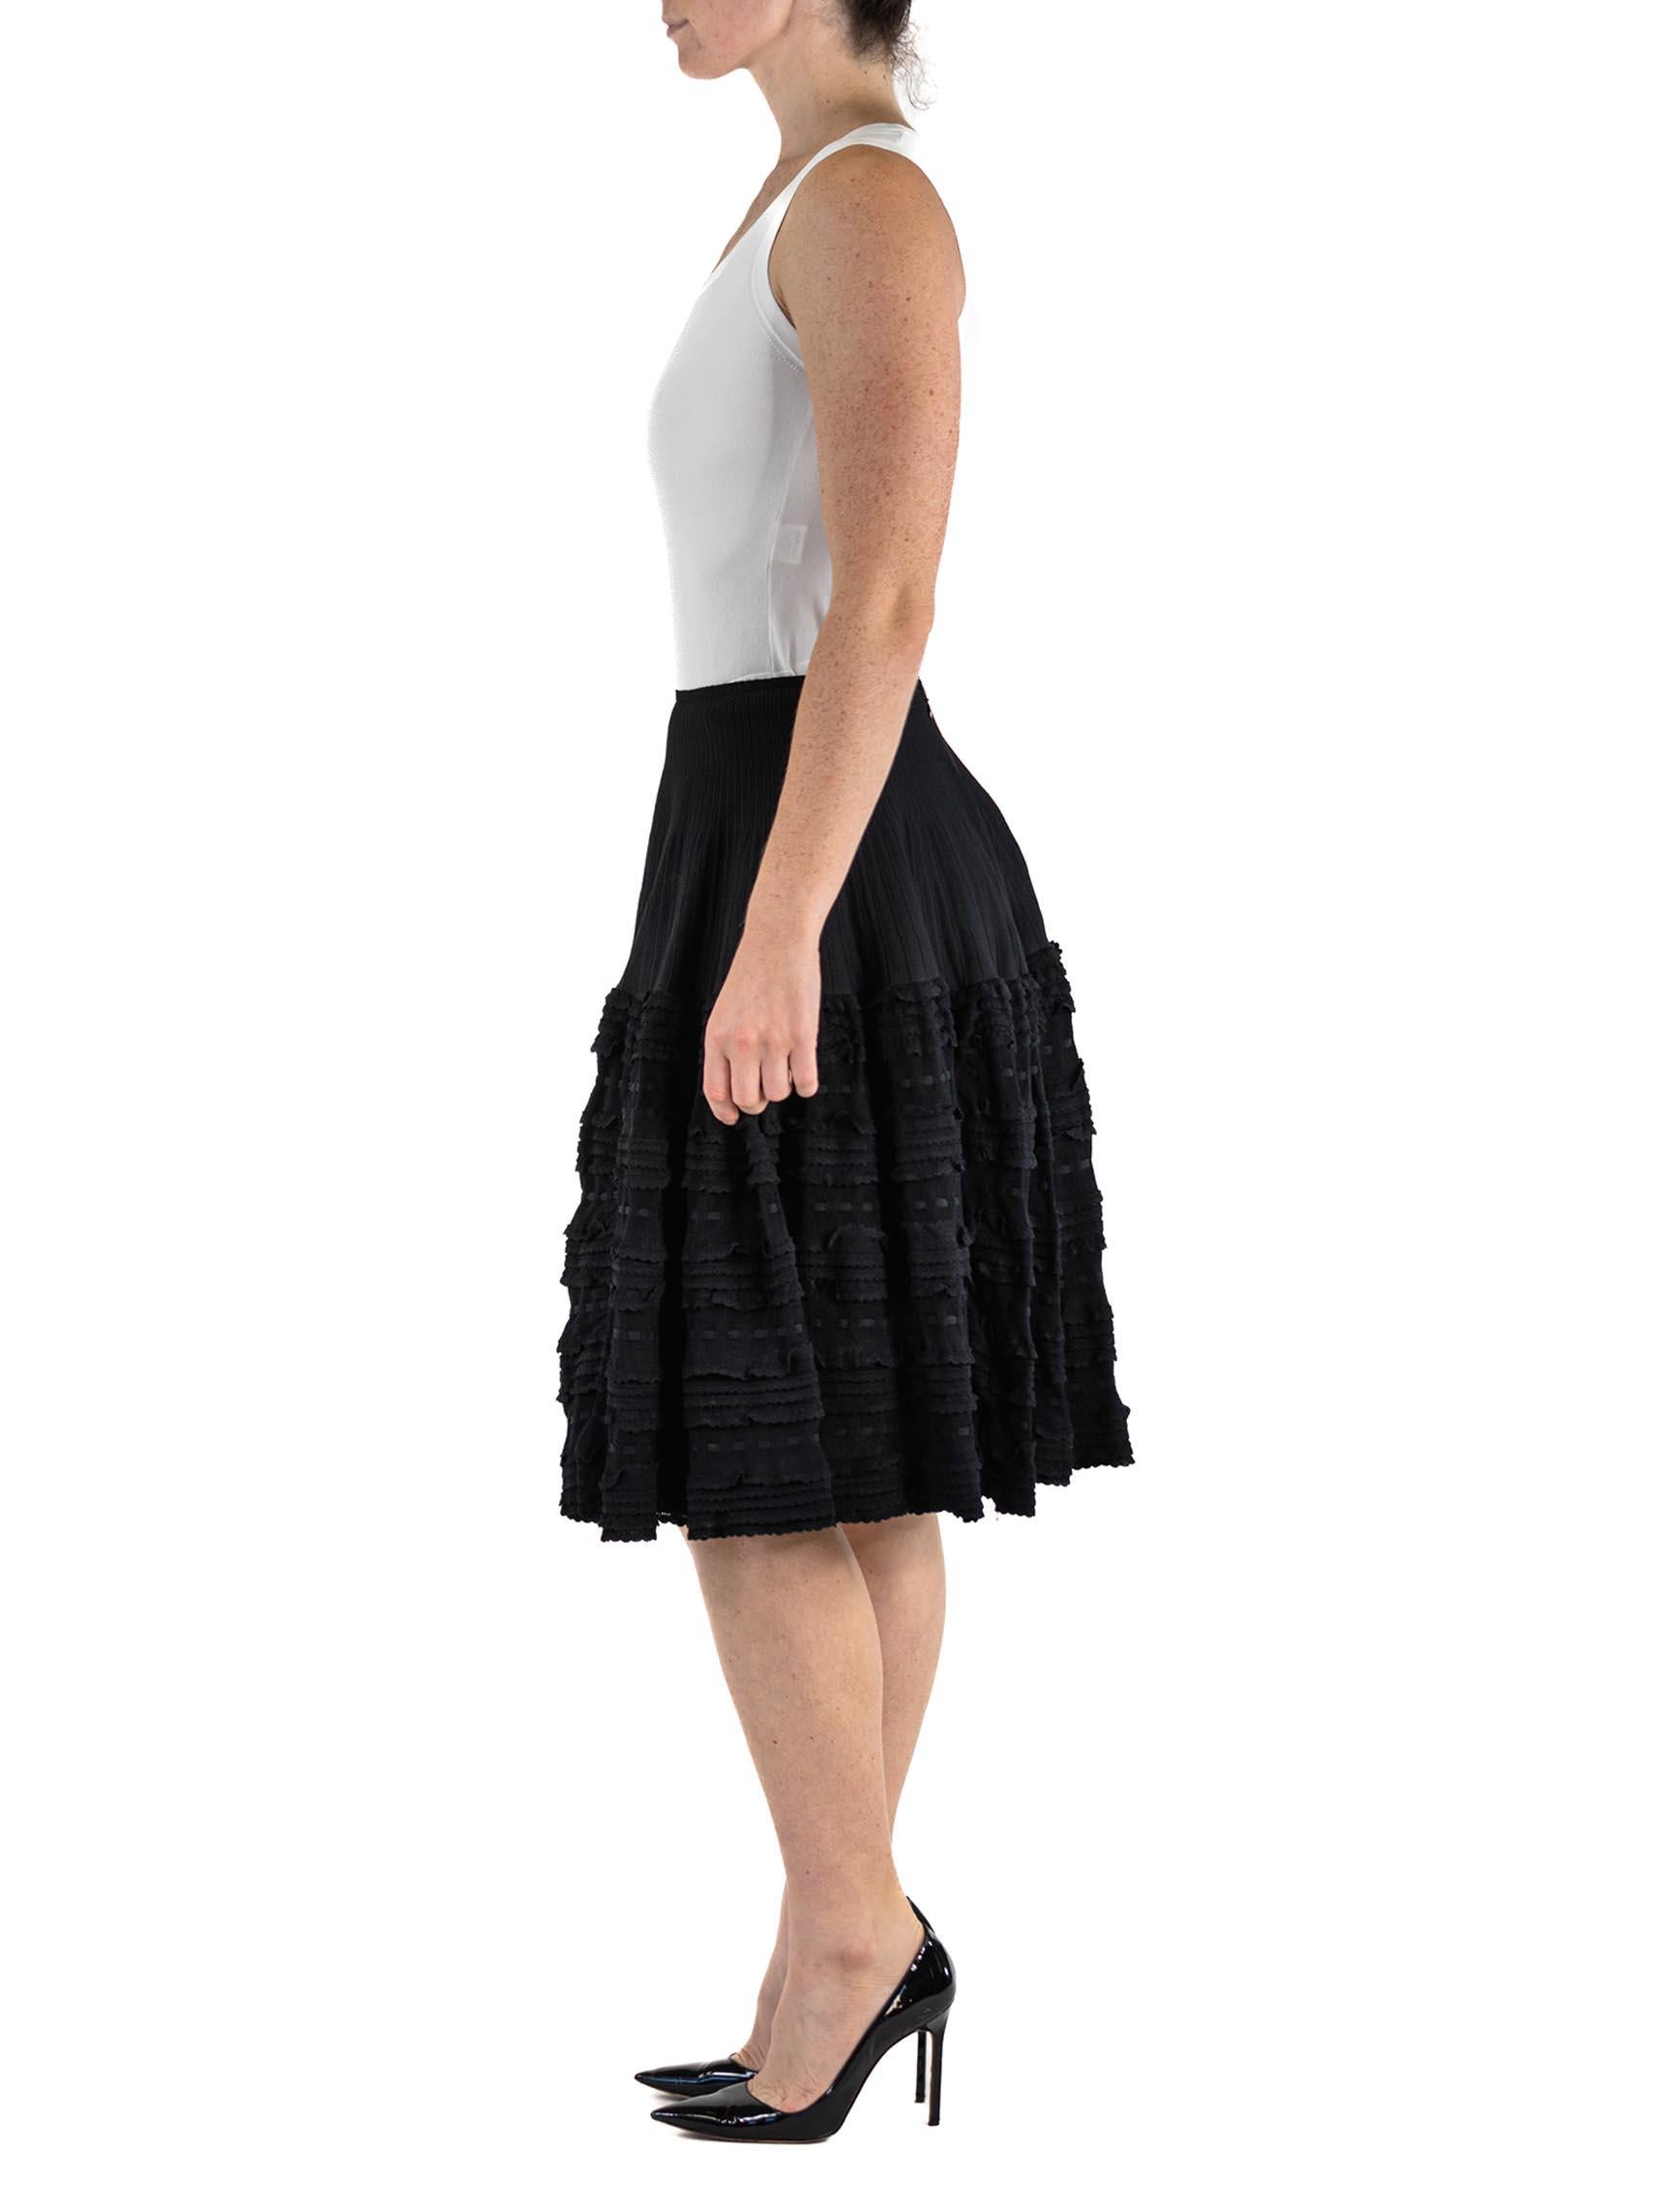 Tagged Size Large 2000S AZZEDINE ALAIA Black White Rayon Blend Crotchet Knit A Line Skirt And Tank Top Ensemble 